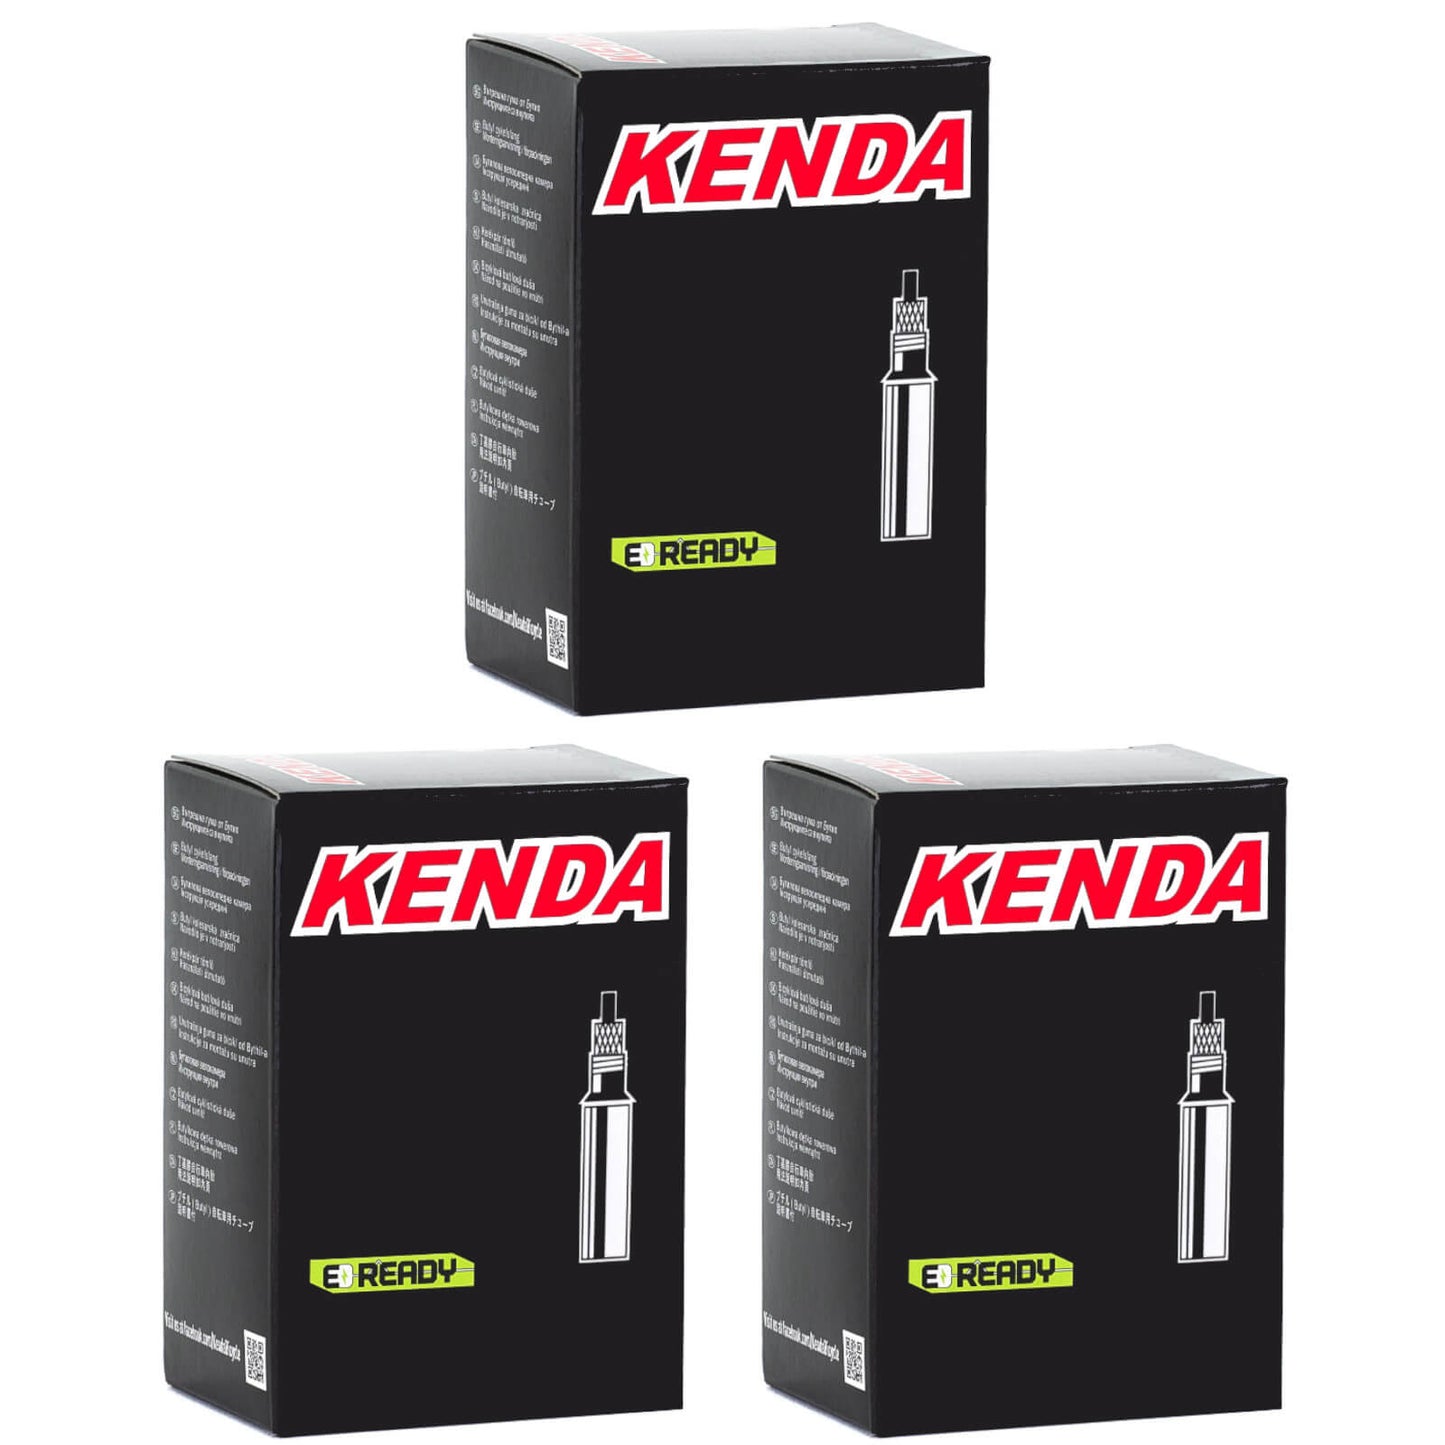 Kenda 26x1.75-2.35" 26 Inch Presta Valve Bike Inner Tube Pack of 3